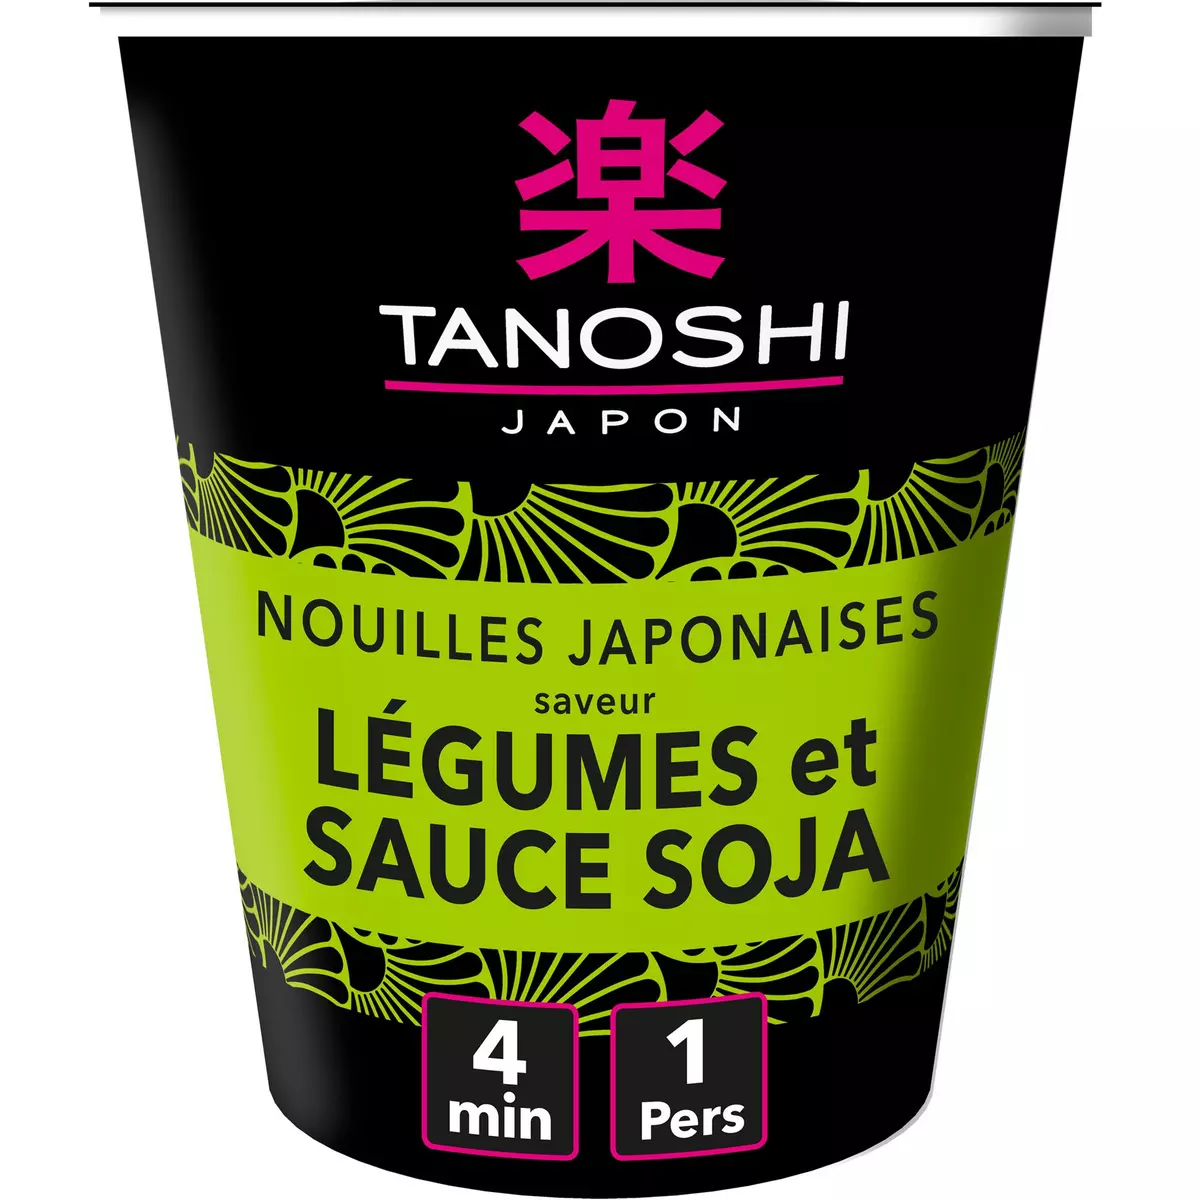 TANOSHI Nouilles japonaises saveurs légumes et sauce soja façon kinpira 1 portion 65g